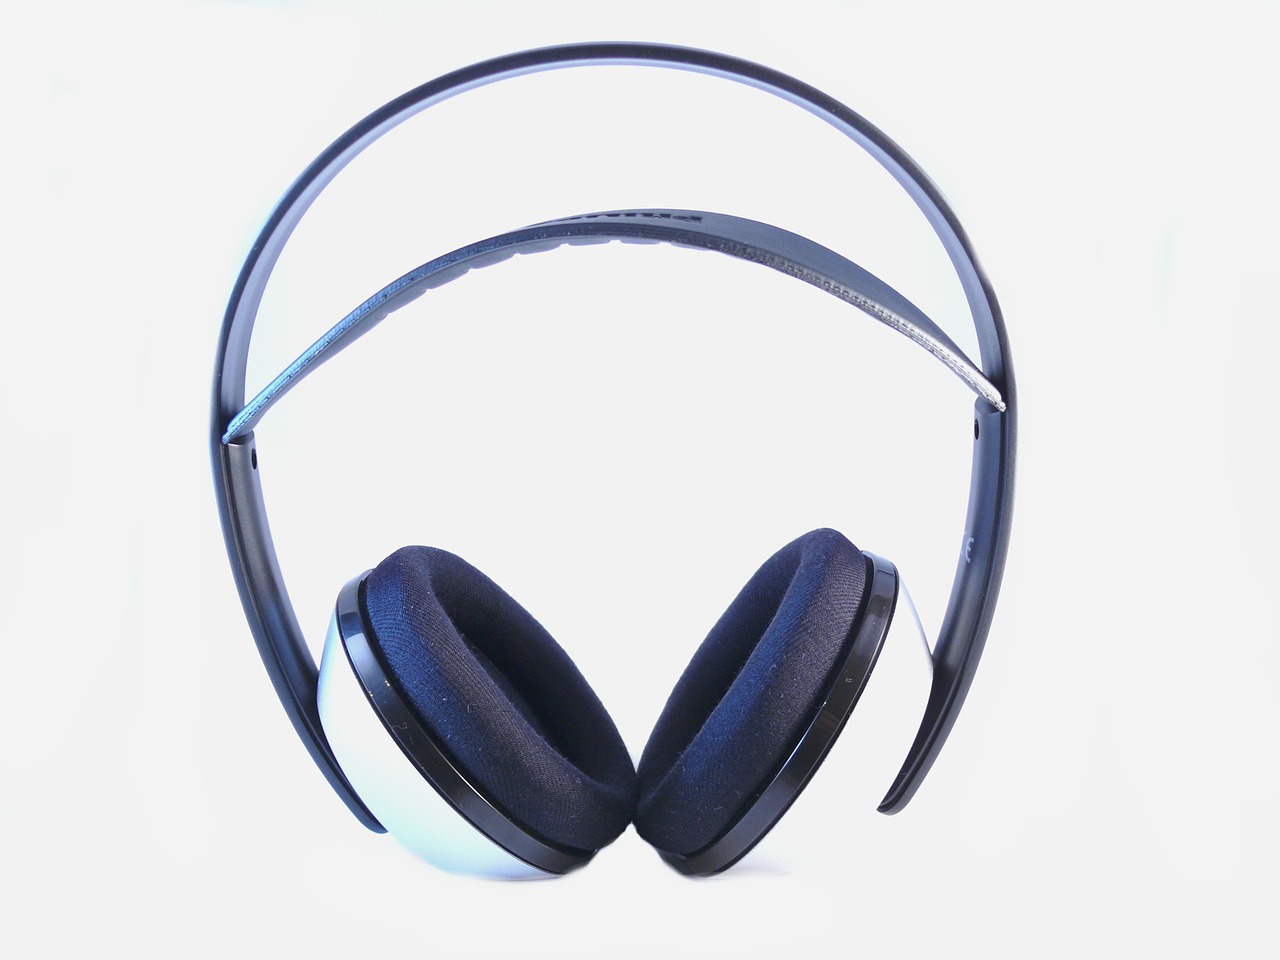 Ecandy Bluetooth Headphones,headphones, wireless, technology